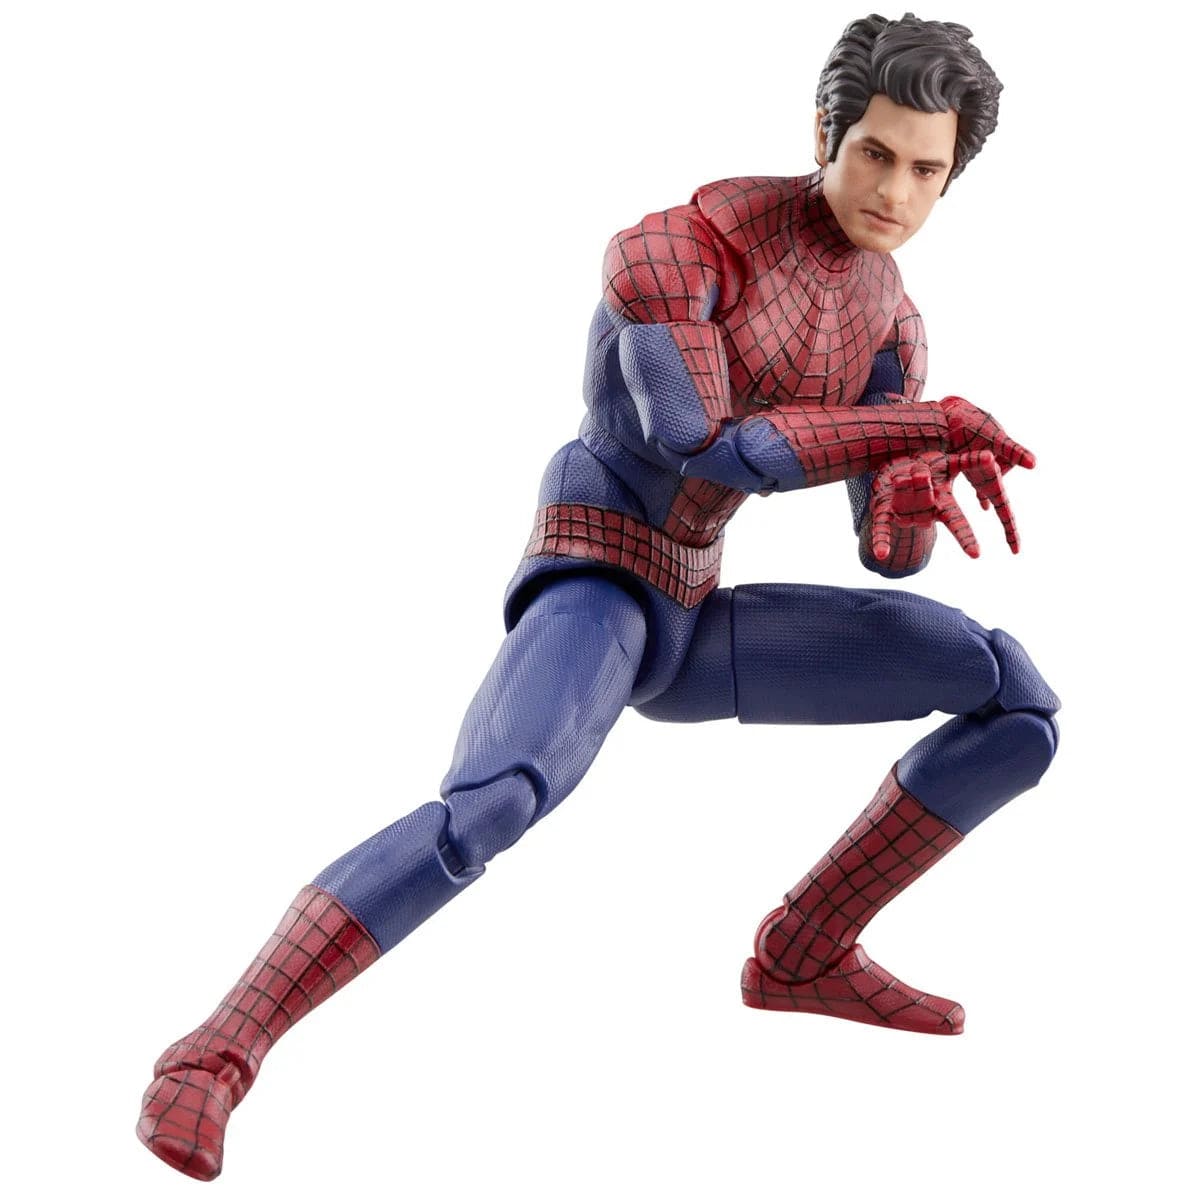 Spider-Man: No Way Home Marvel Legends The Amazing Spider-Man 6-Inch Action Figure